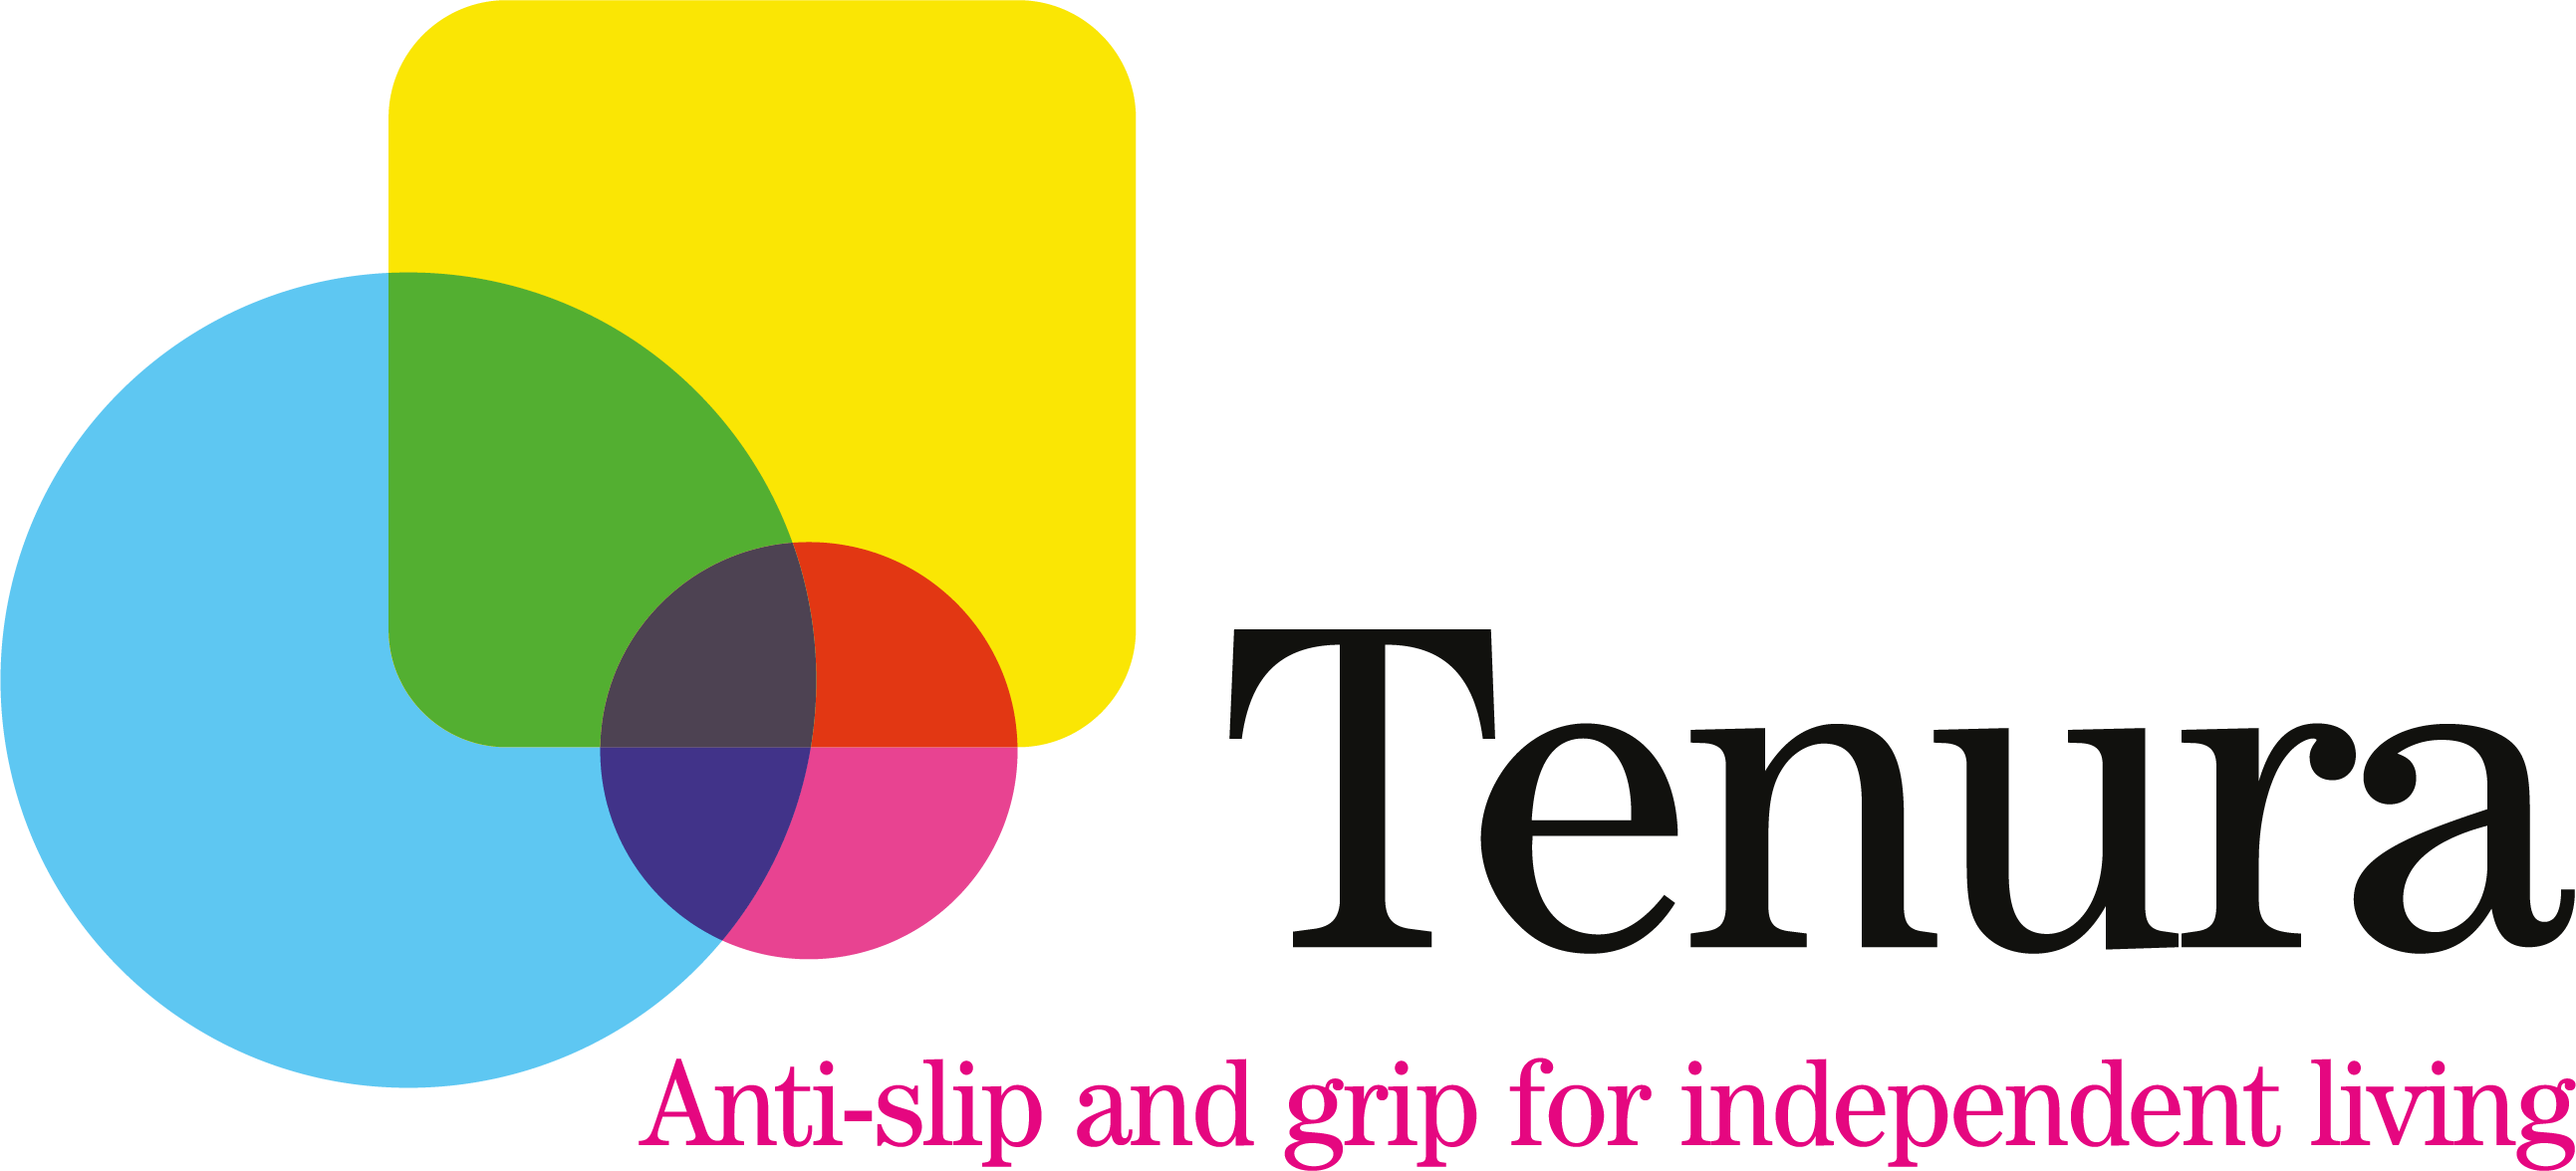 https://www.heskins.com/app/uploads/2011/05/tenura-new-brand-launched.png